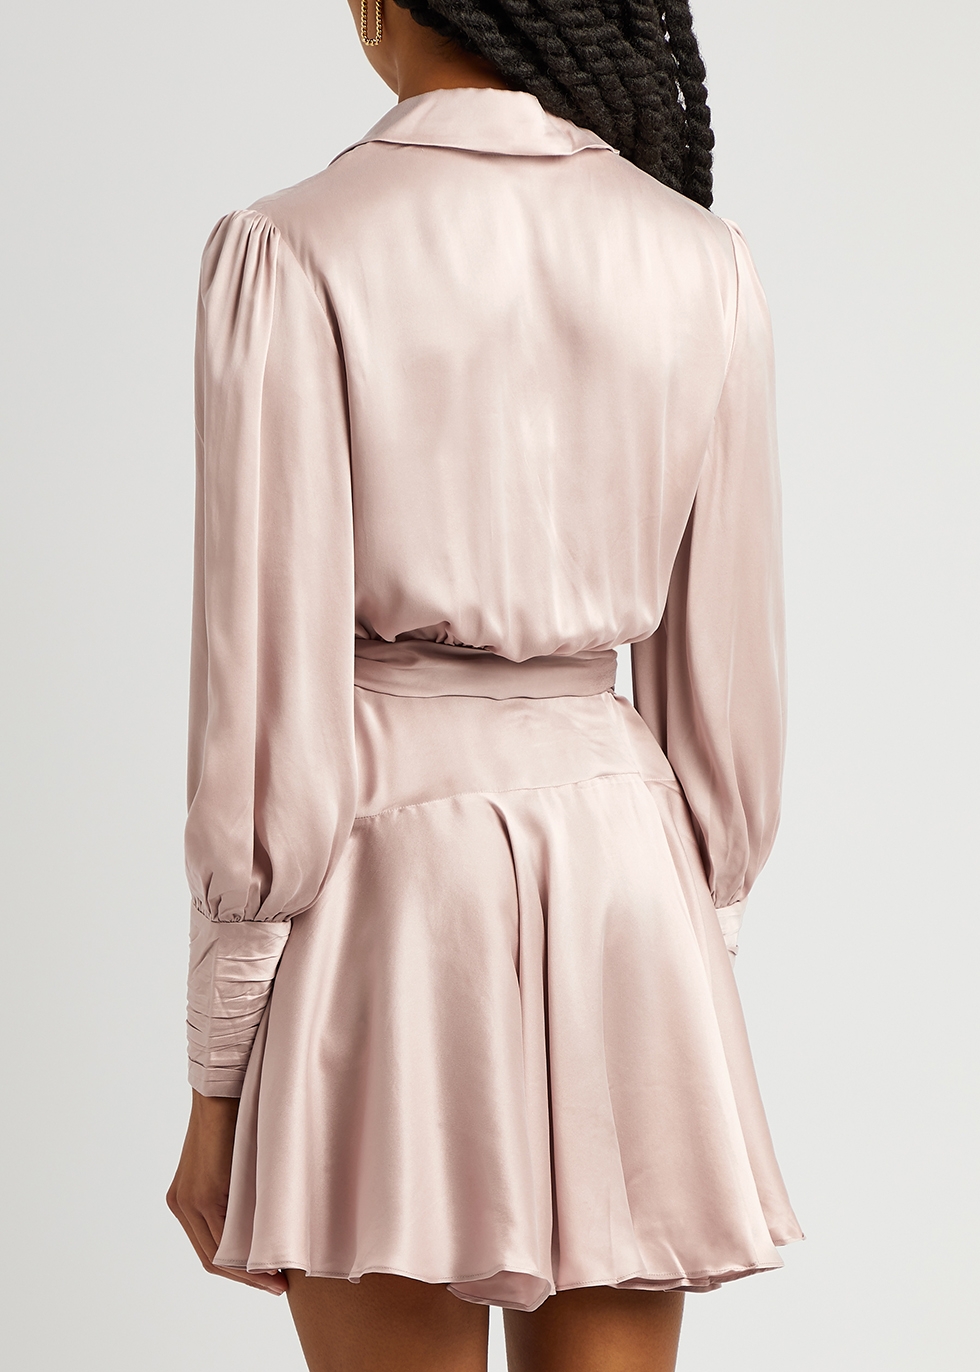 Zimmermann Blush silk wrap dress - Harvey Nichols